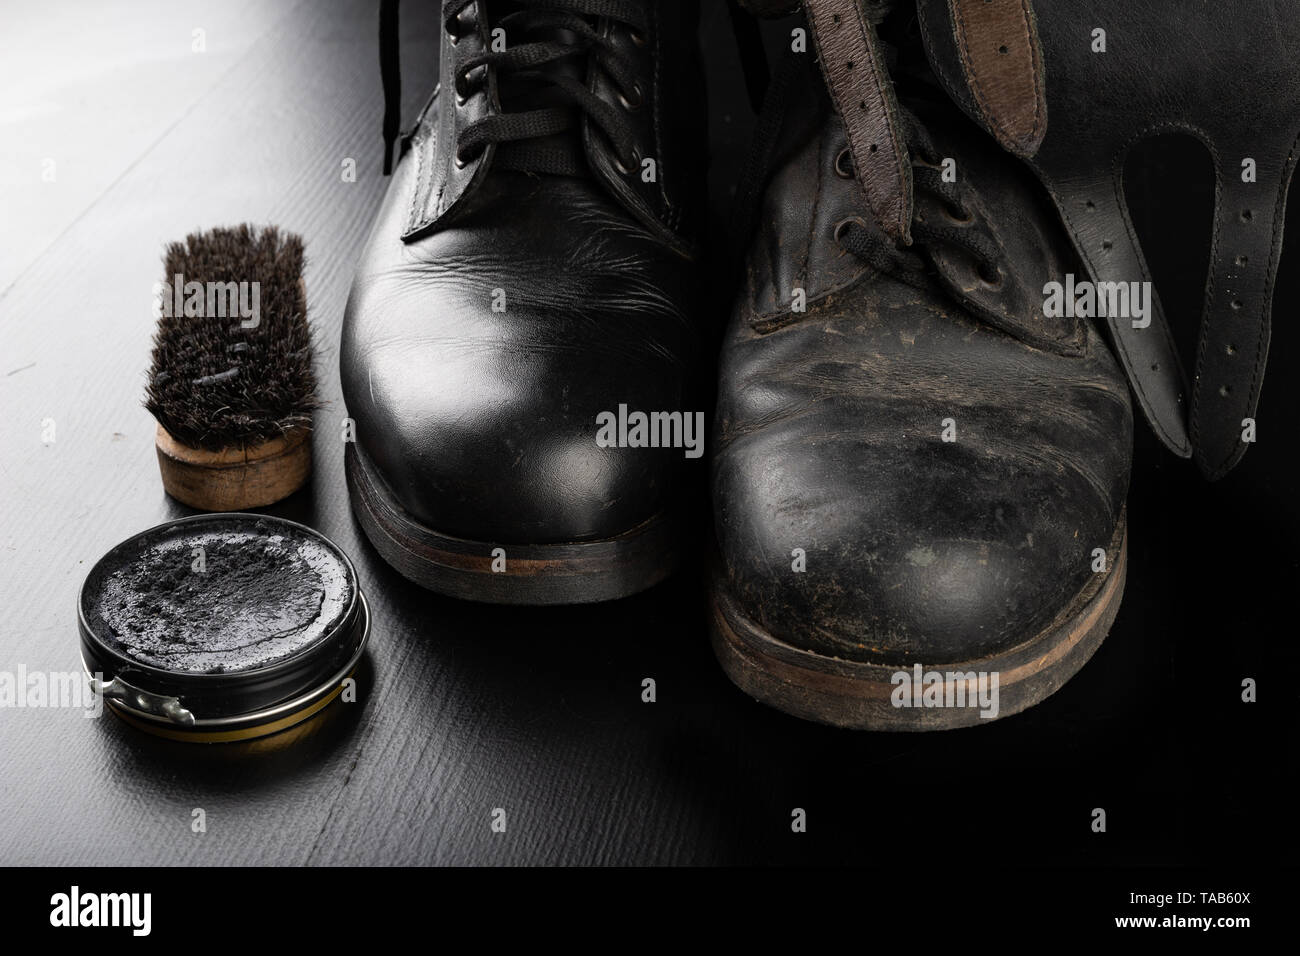 polishing black boots